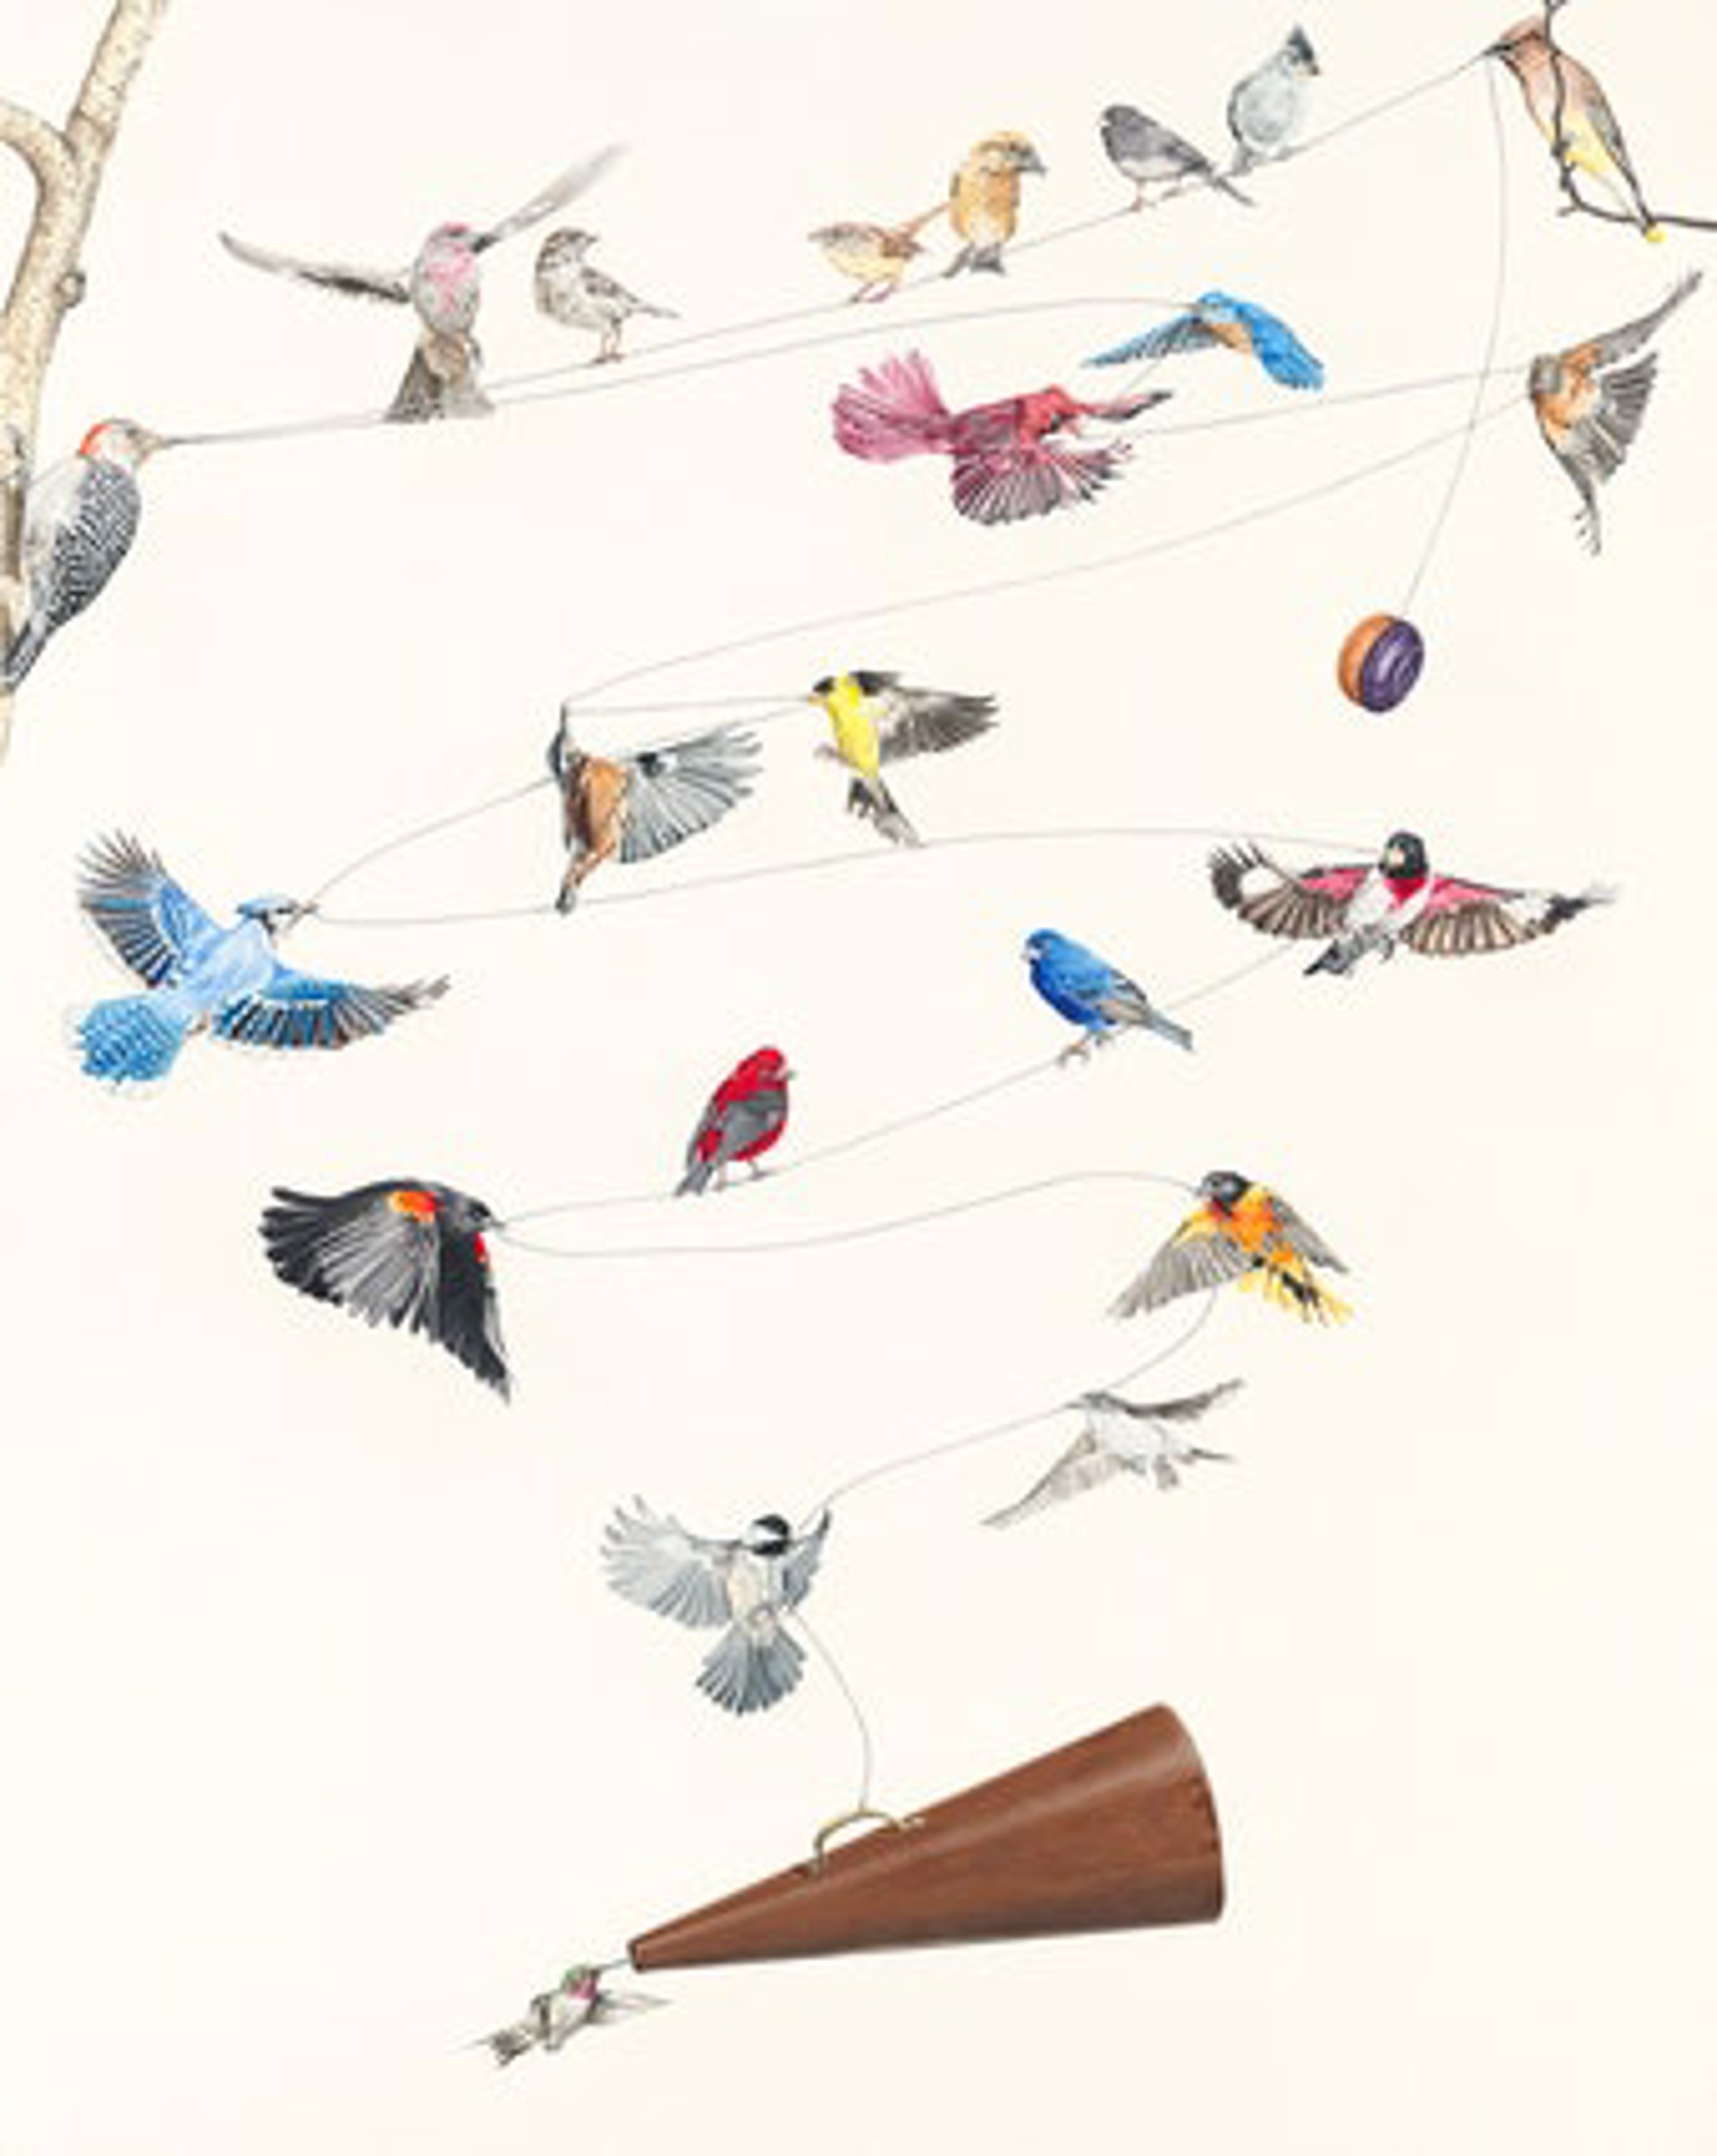 Four Calling Birds 3- Song Birds Full Sized Framed Print by Paul Van Heest